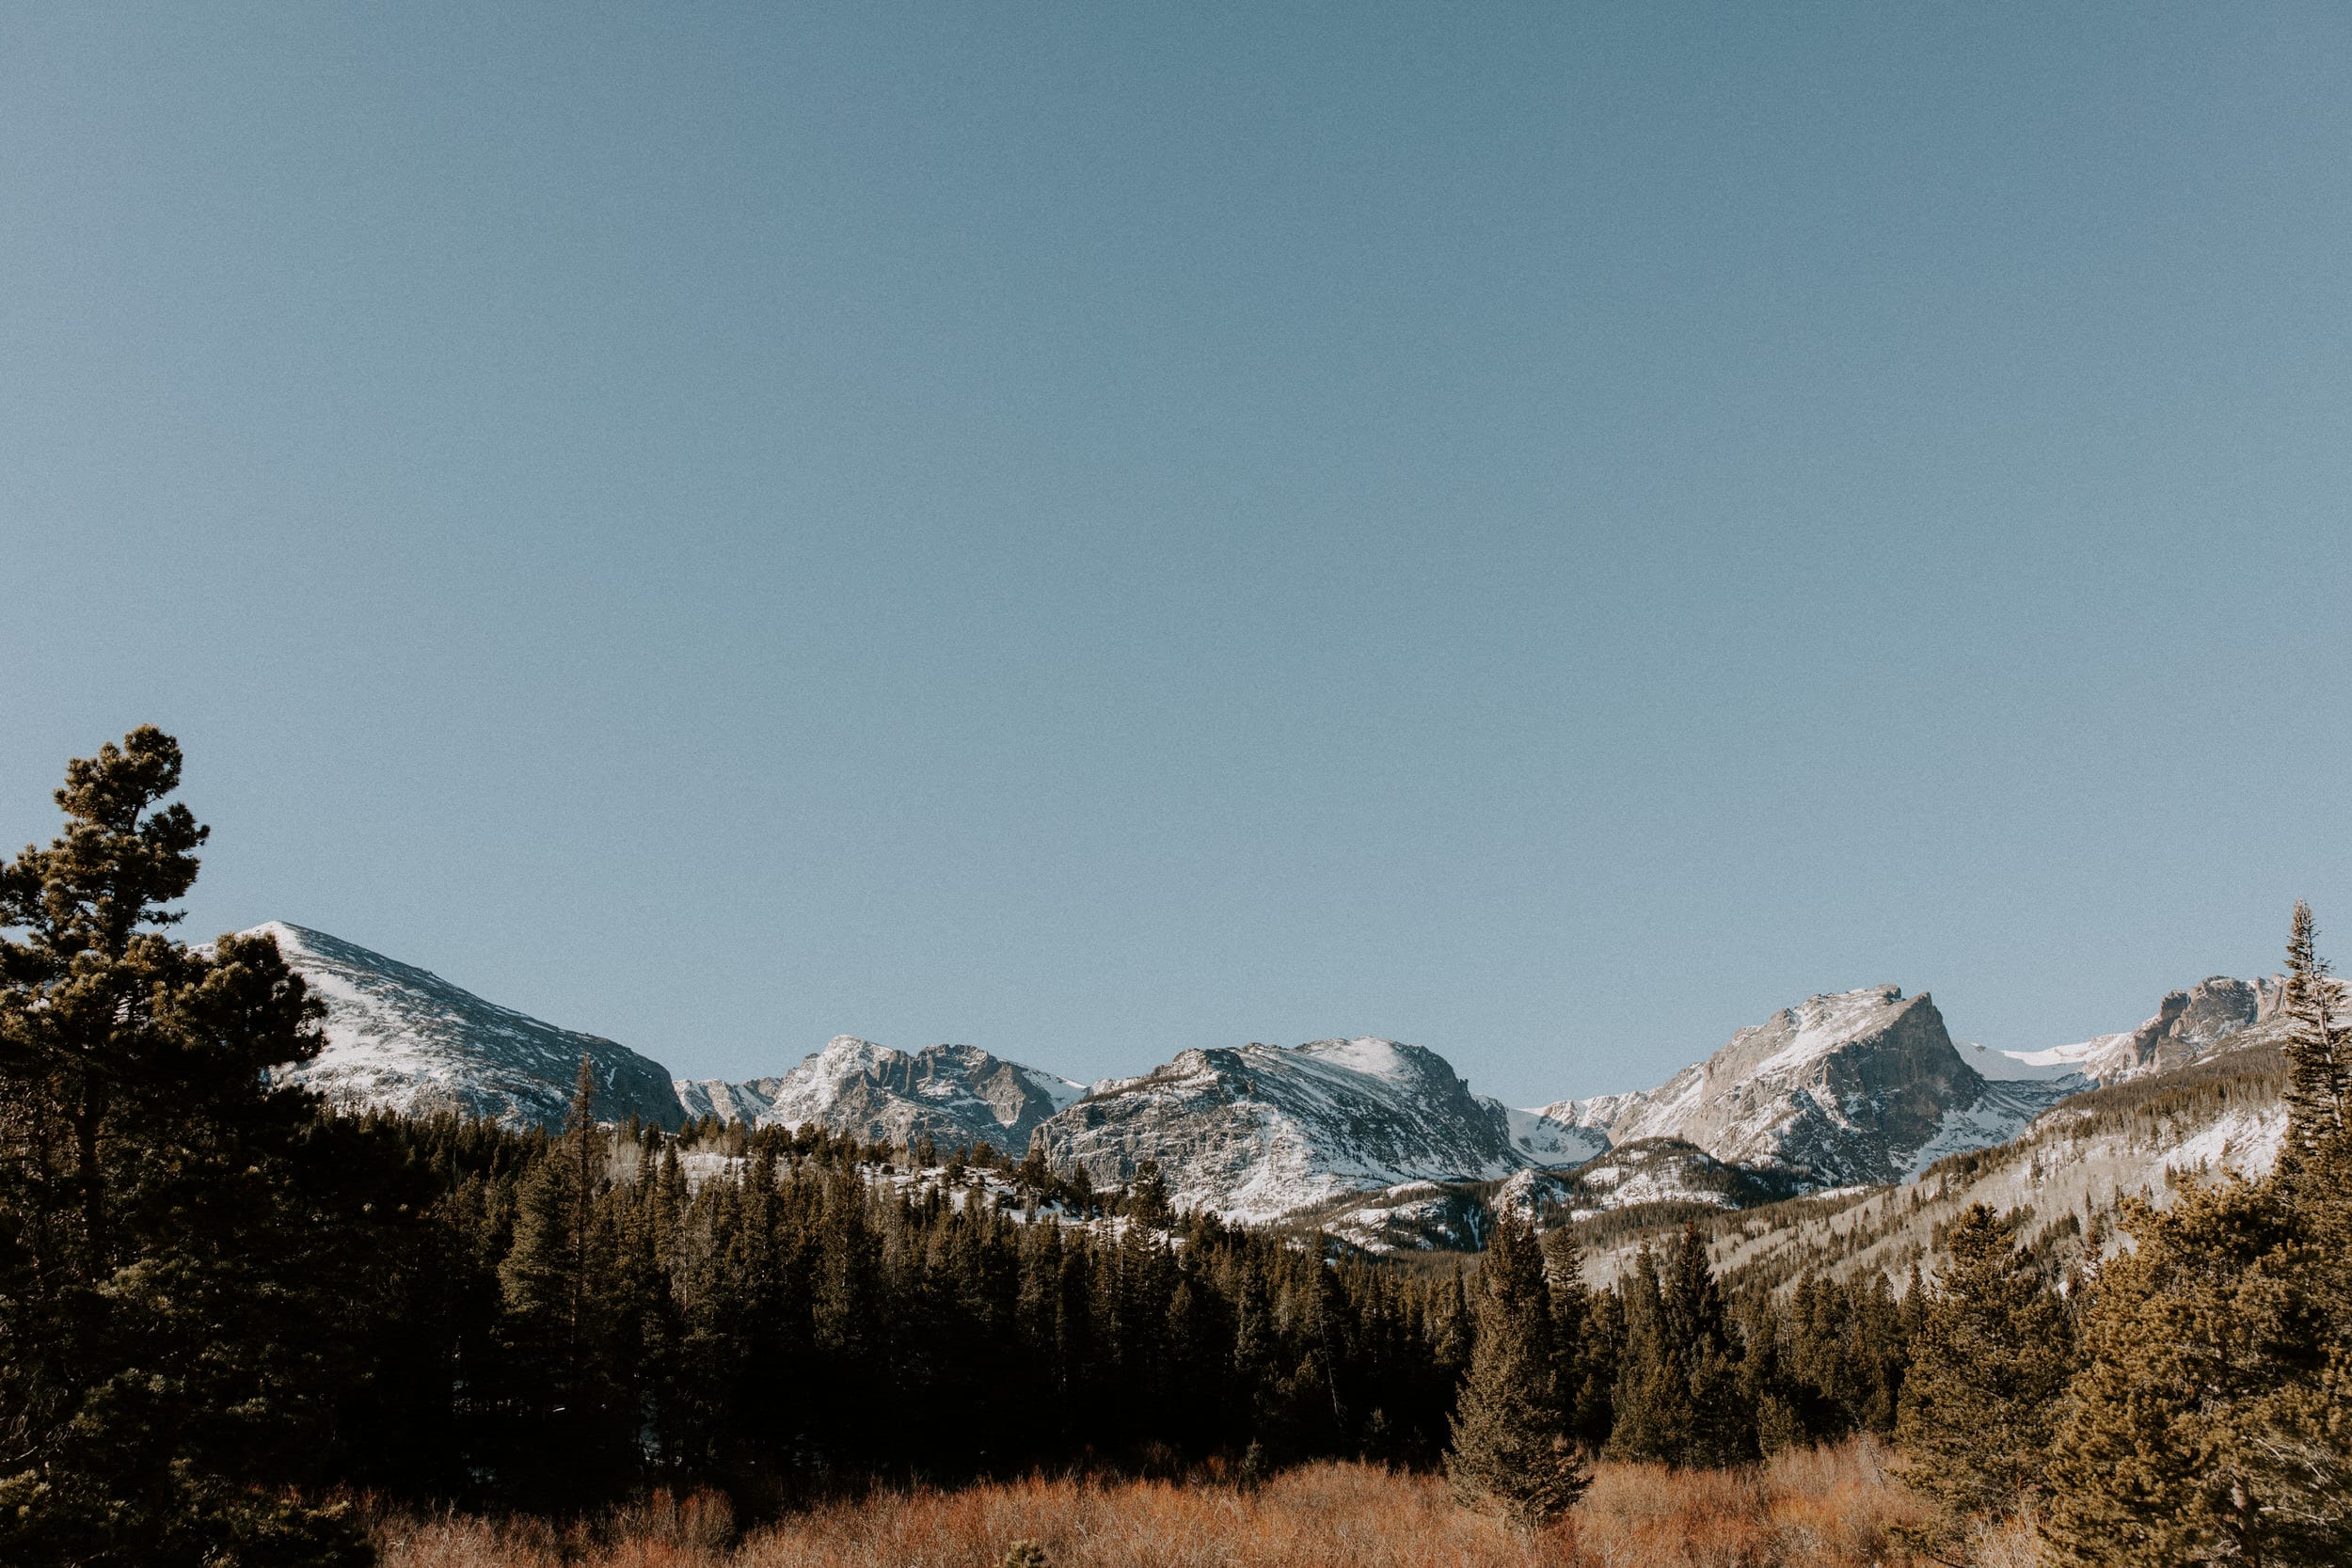 Rocky Mountain, Destination, Engagement Session, Josh Rexford